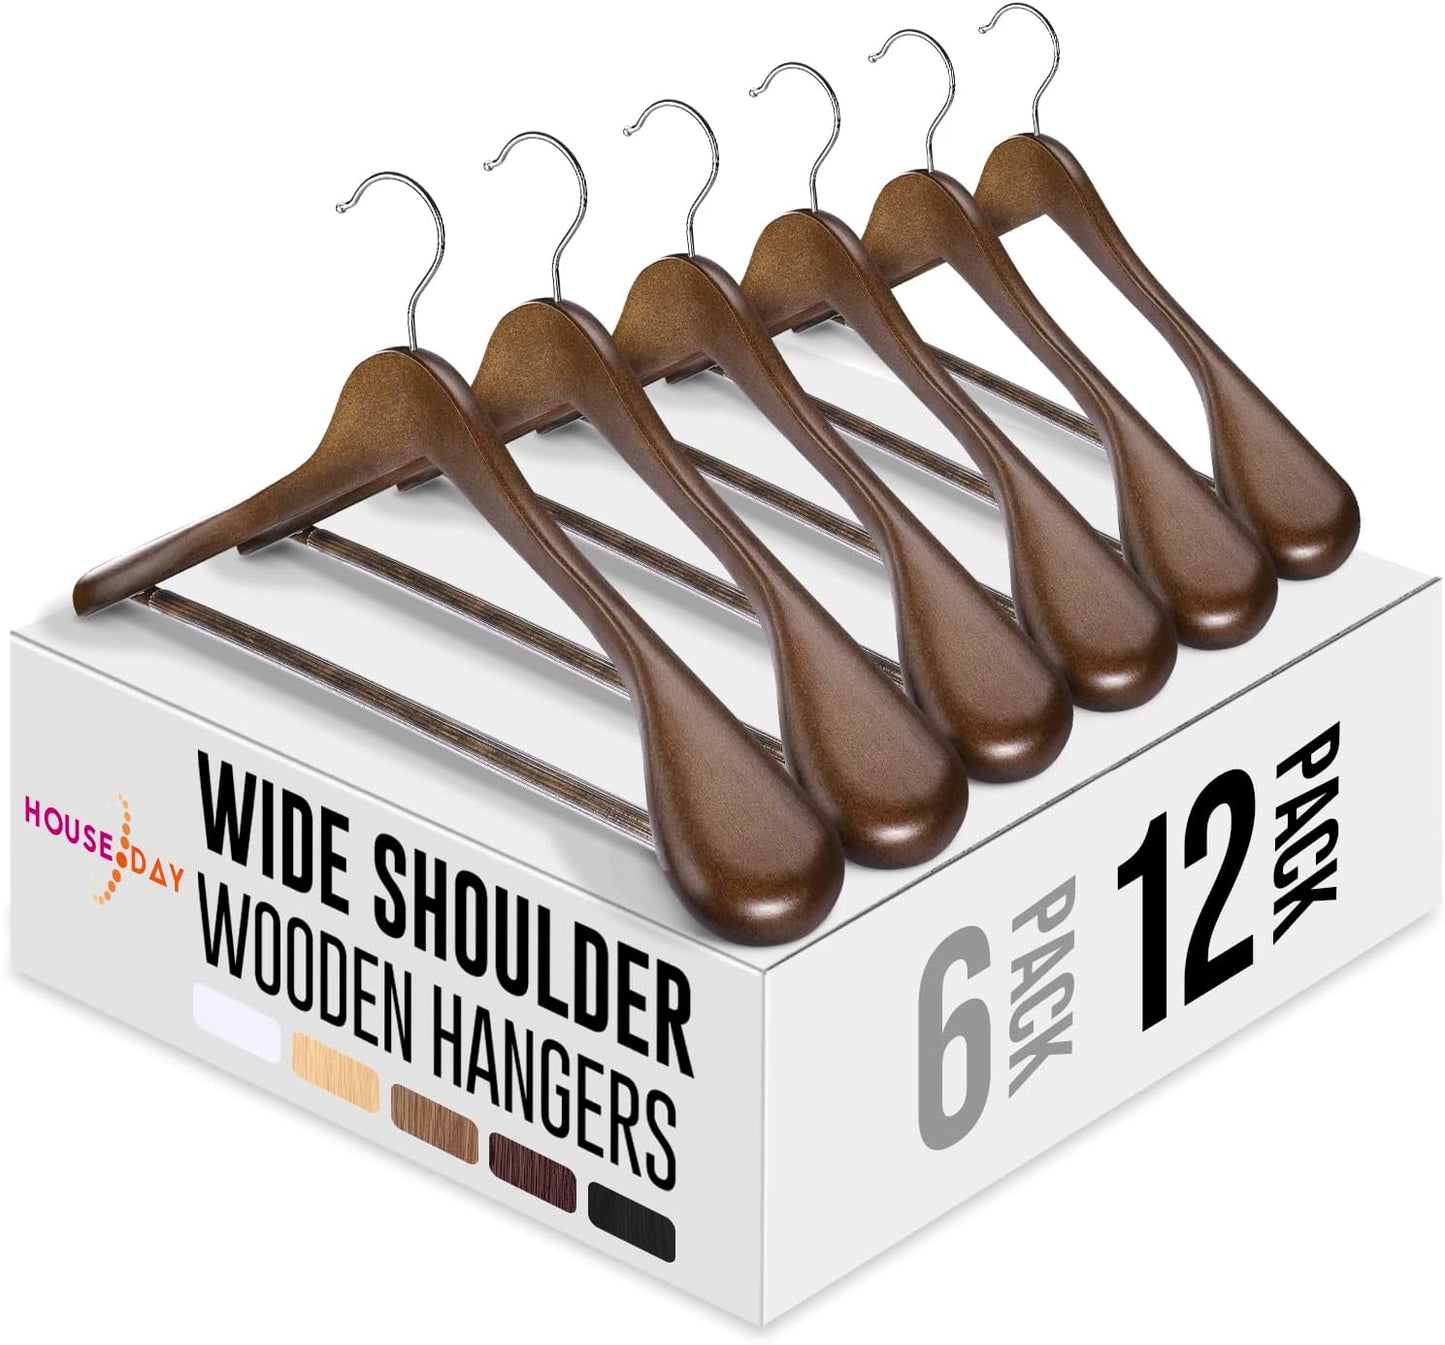 HOUSE DAY Walnut Wide Shoulder Wooden Hangers 12 Pack